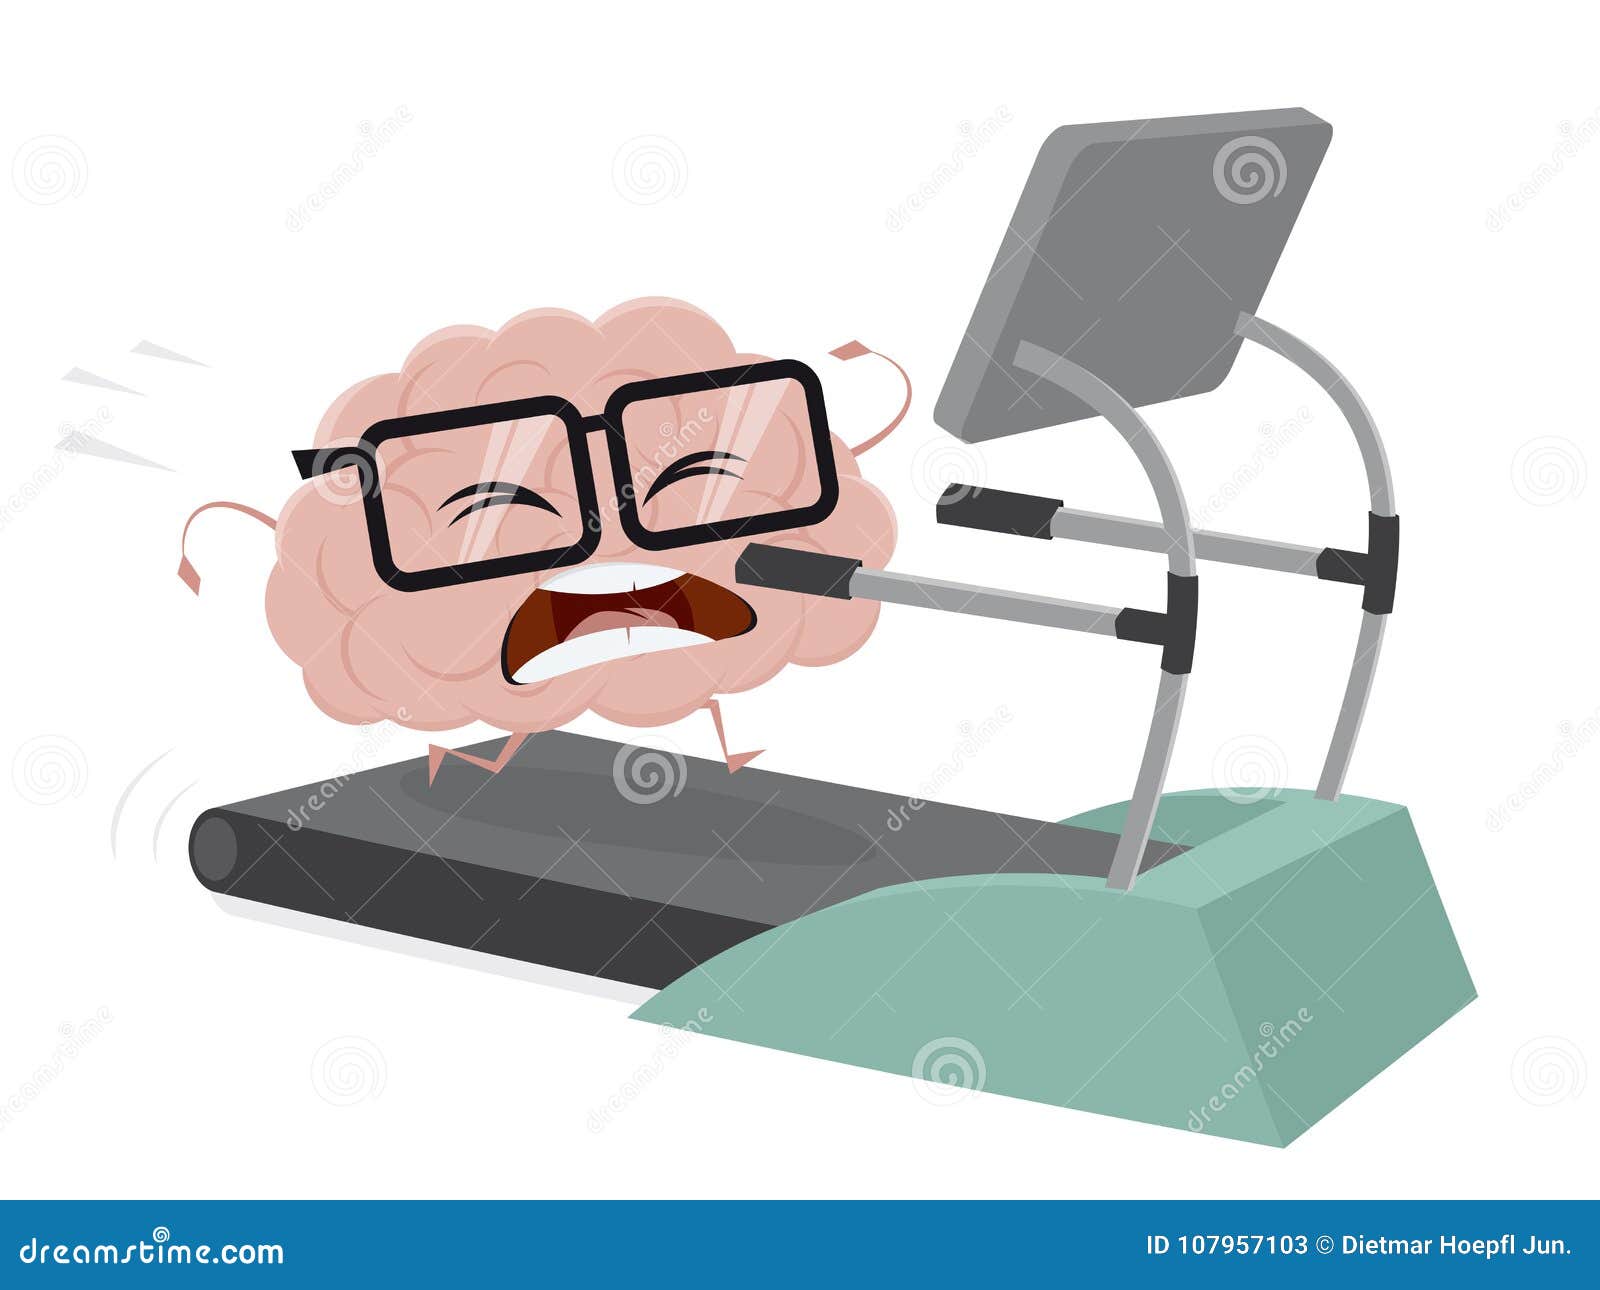 Funny Brain Training on a Treadmill Stock Vector - Illustration of health,  creative: 107957103